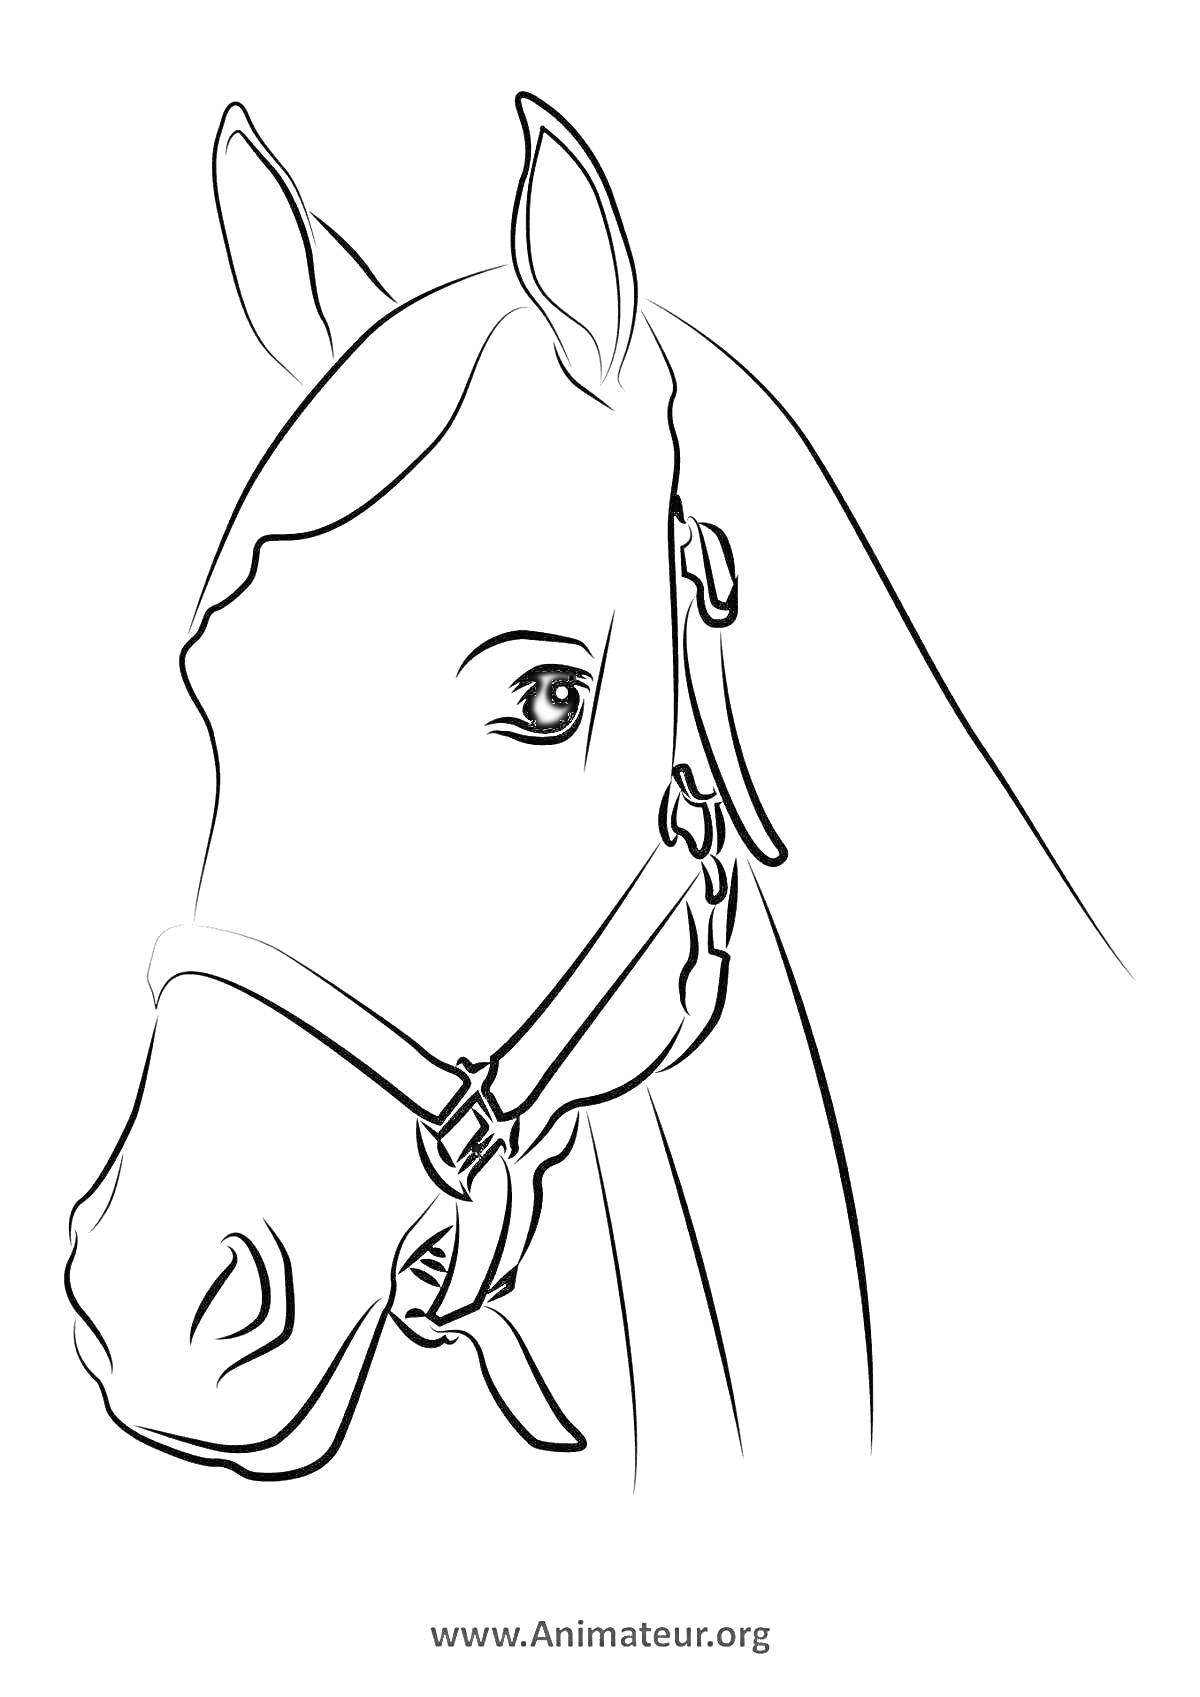 На раскраске изображено: Лошадь, Конь, Голова, Уши, Уздечка, Глаза, Грива